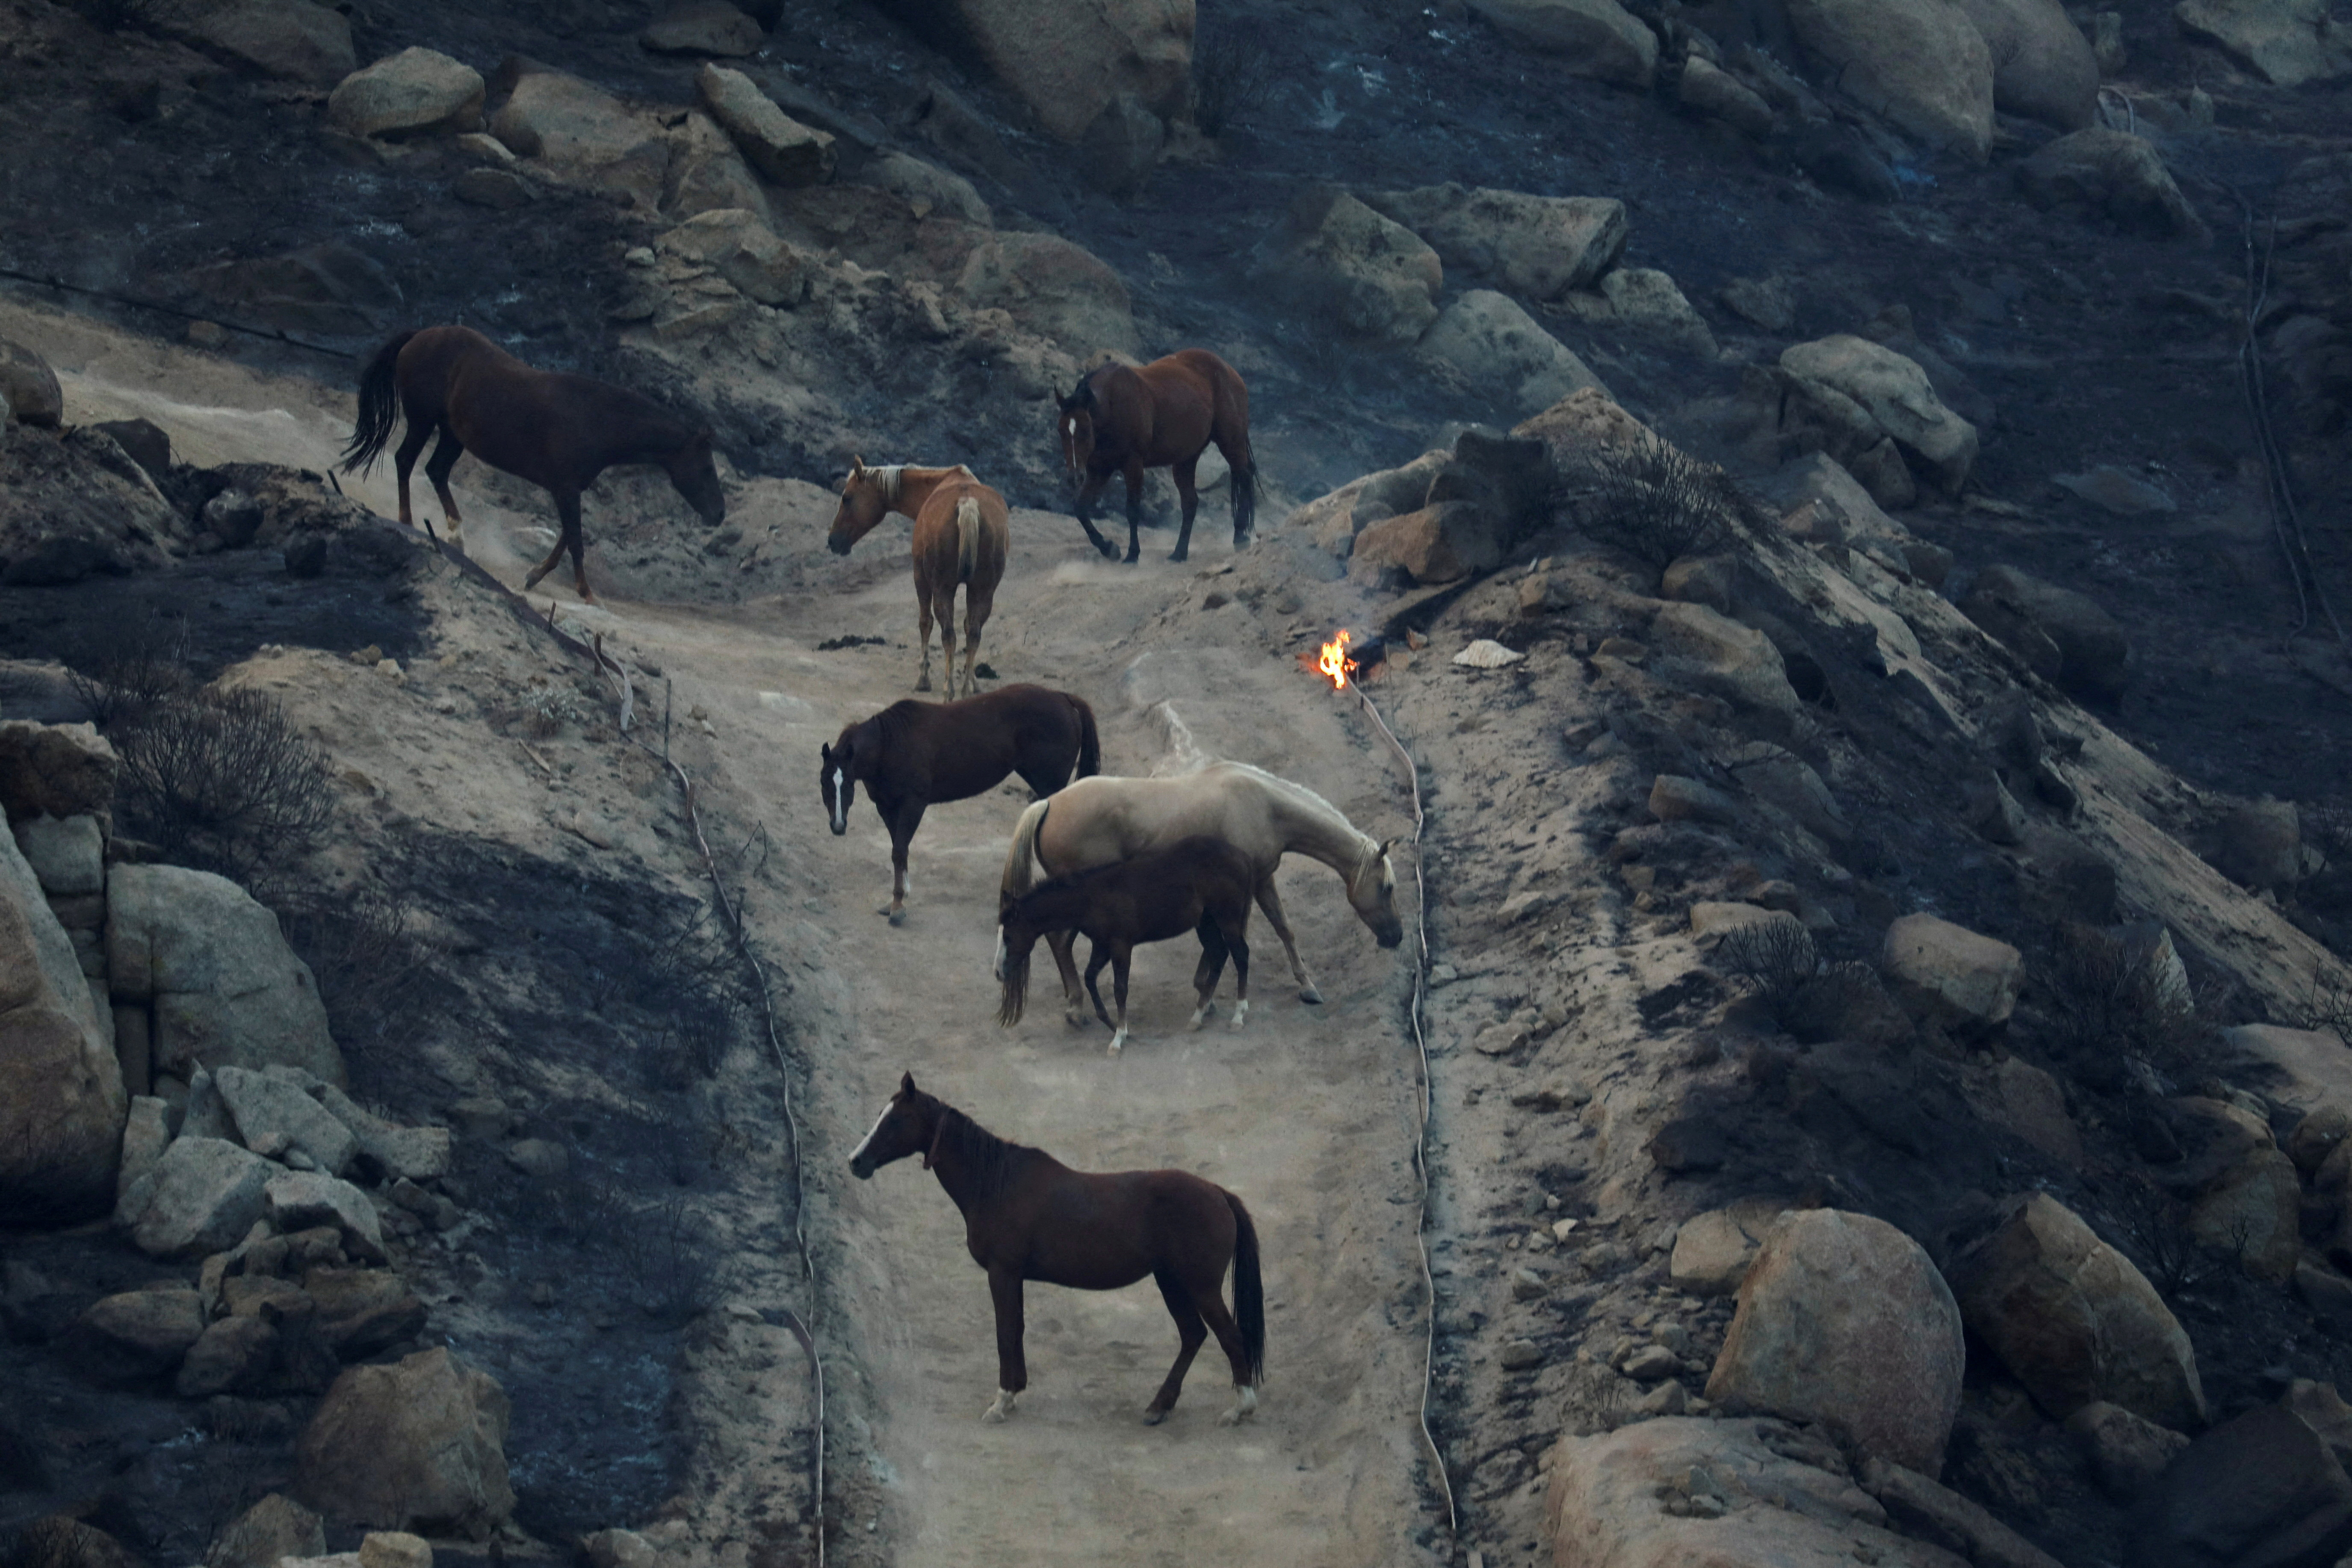 As California wildfire rages, volunteers help rescue horses, livestock |  Reuters